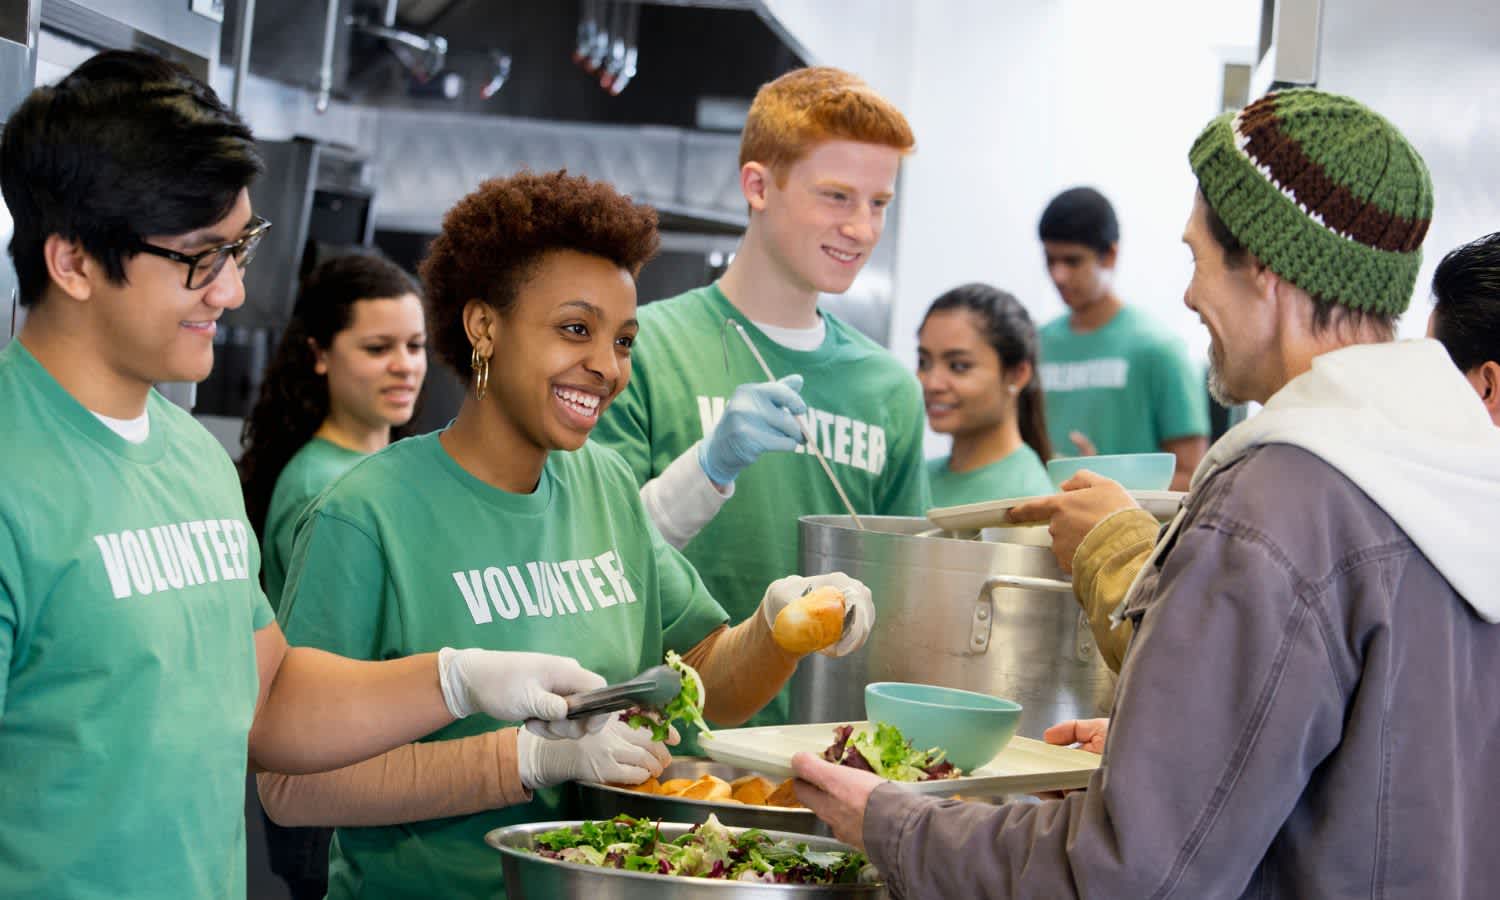 Food service volunteering